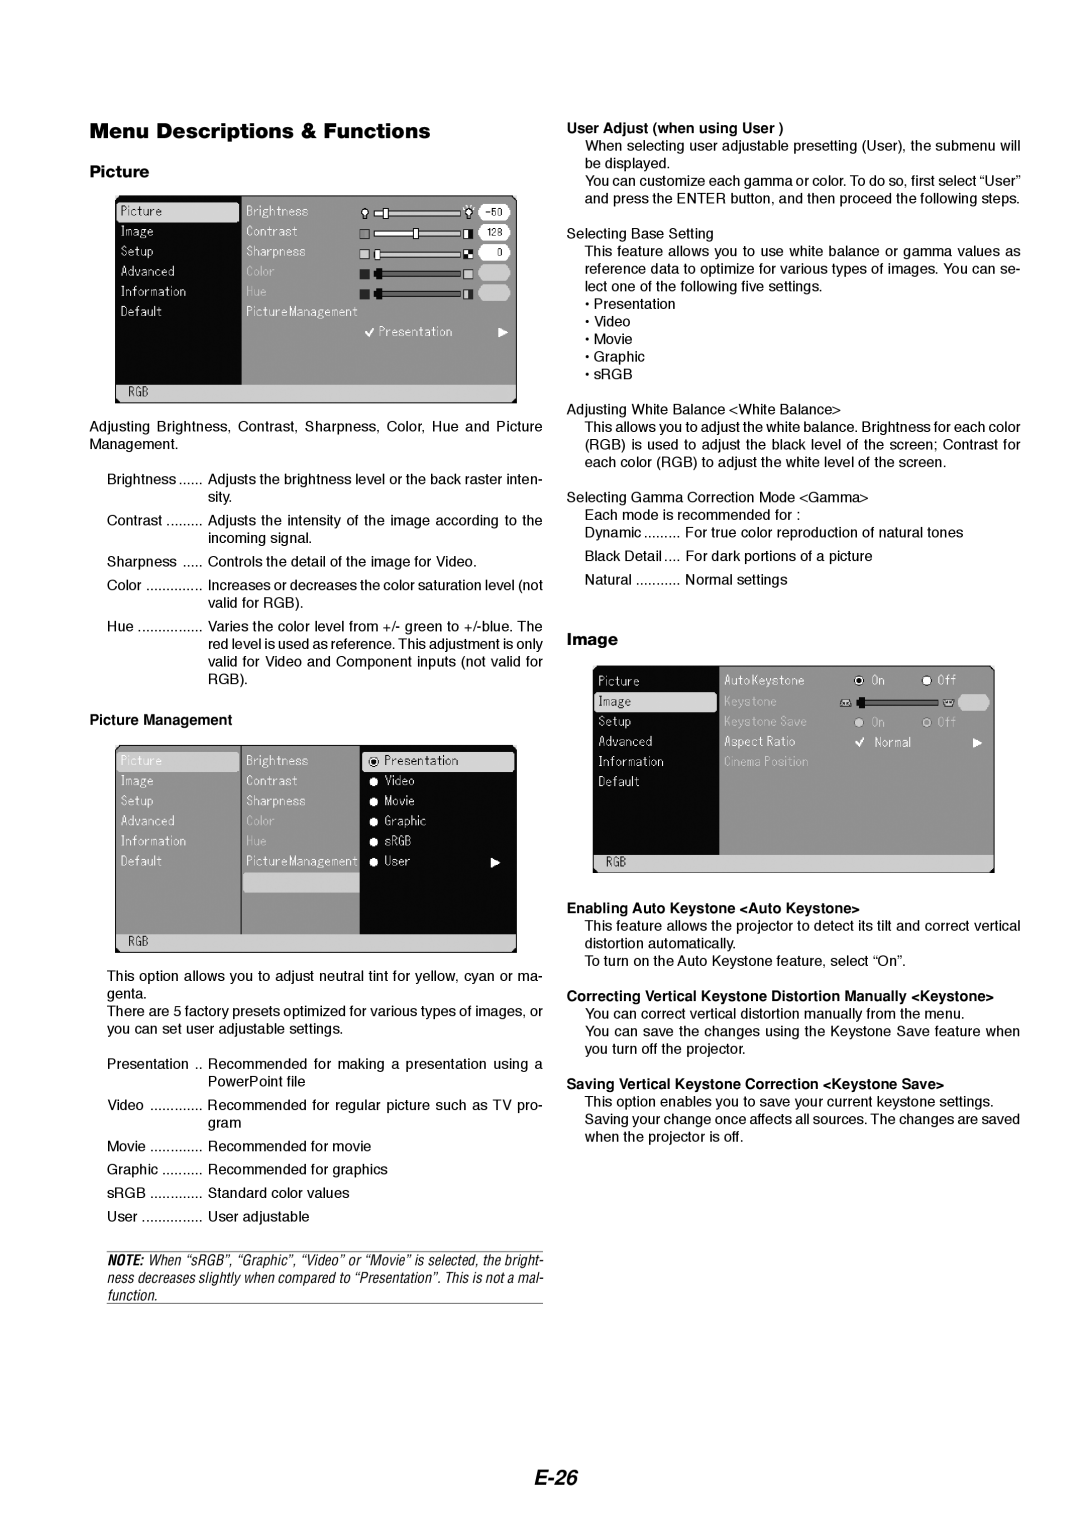 Dukane 8766 manual Menu Descriptions & Functions, E-26, Image, Picture Management, User Adjust when using User 